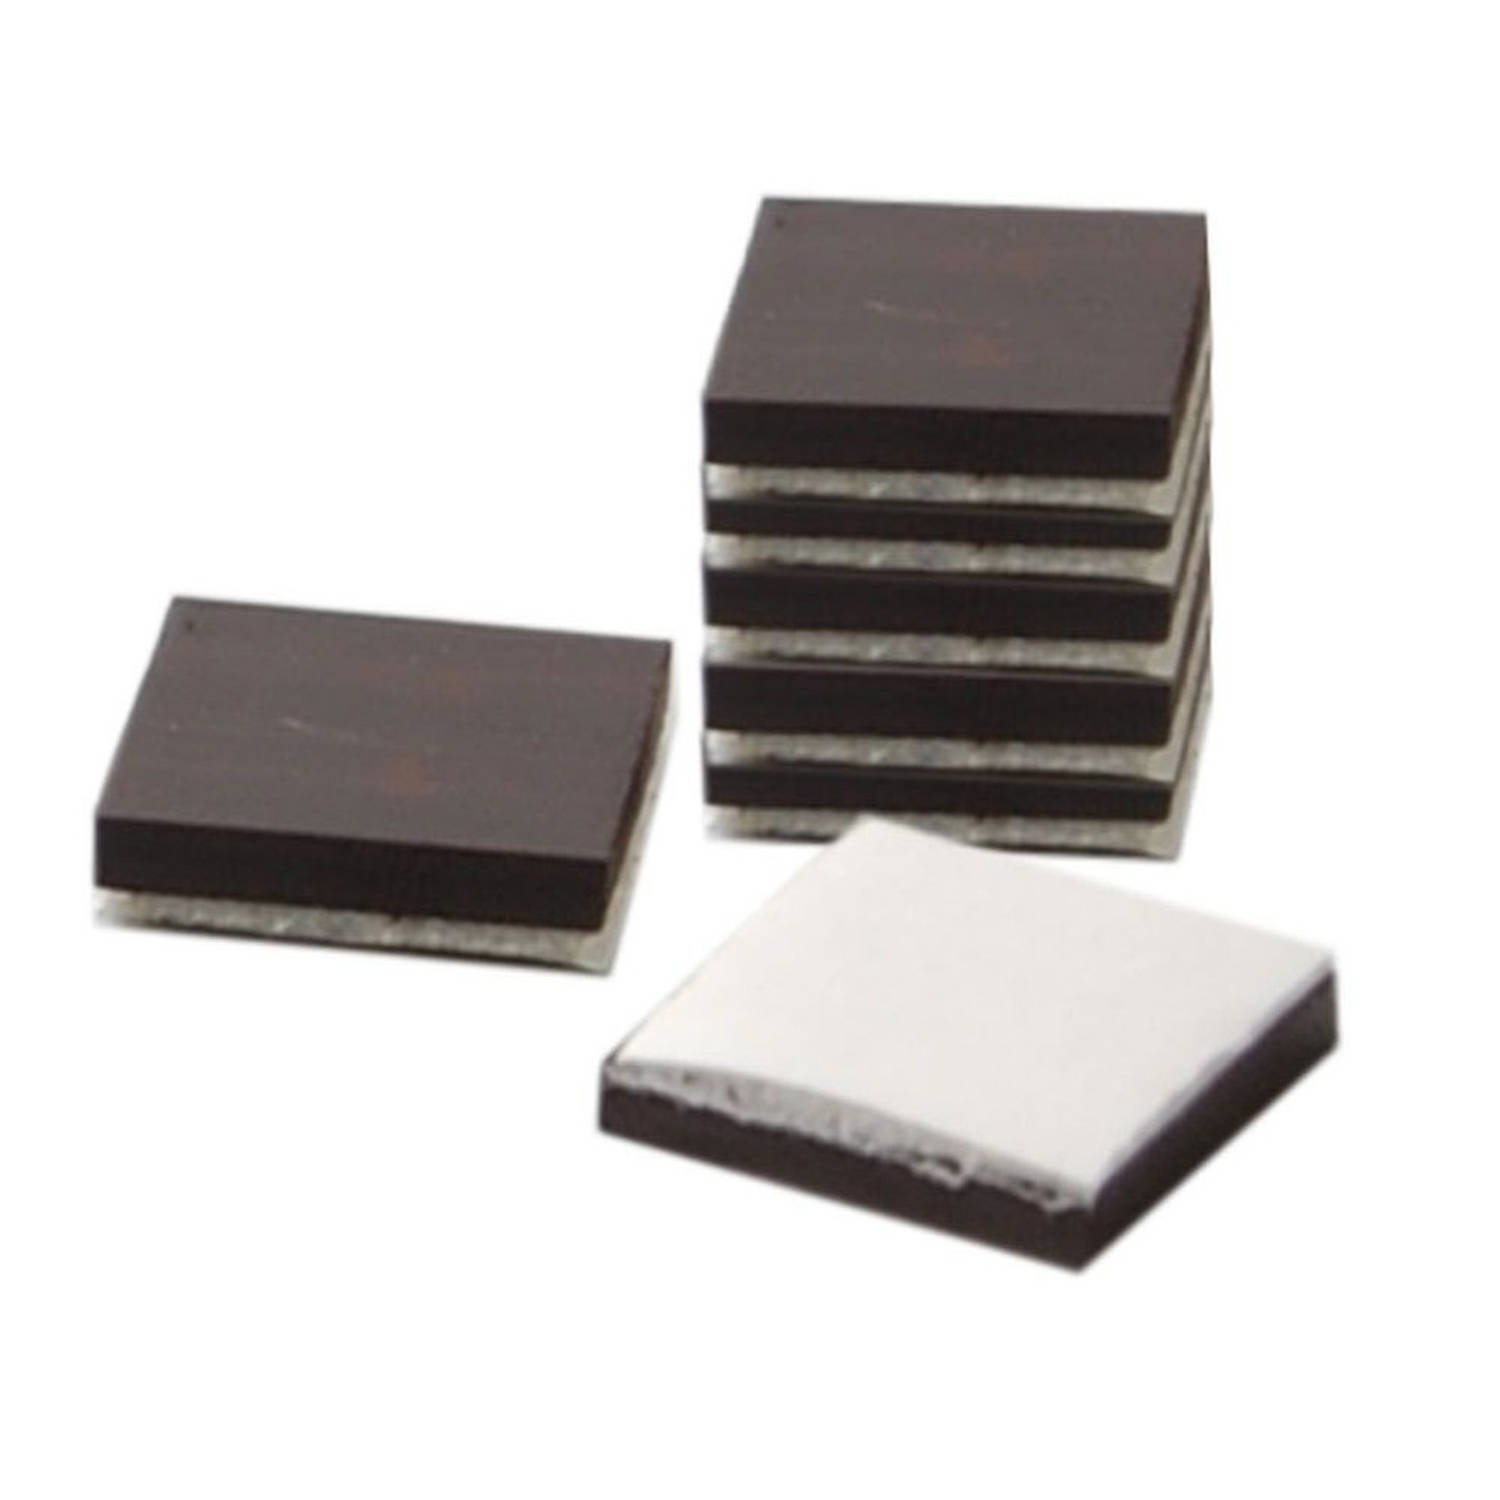 24x Vierkante Koelkast-whiteboard Magneten Met Plakstrip 2 X 2 Cm Zwart Hobby En Kantoorartikelen 2c